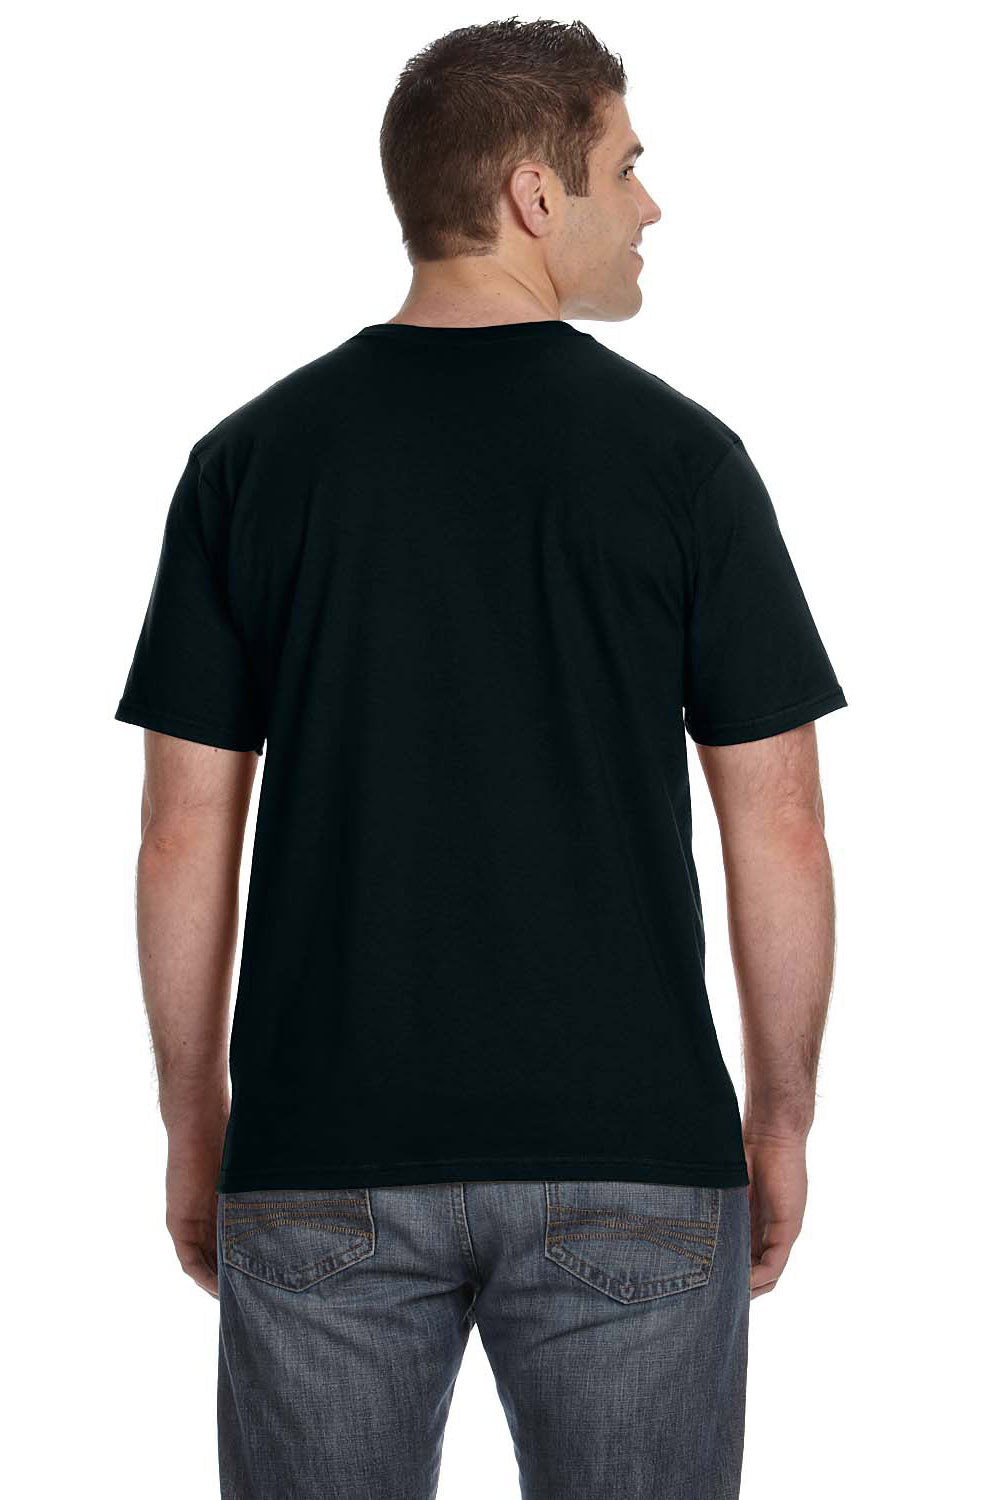 Anvil 980 Mens Short Sleeve Crewneck T-Shirt Black Back